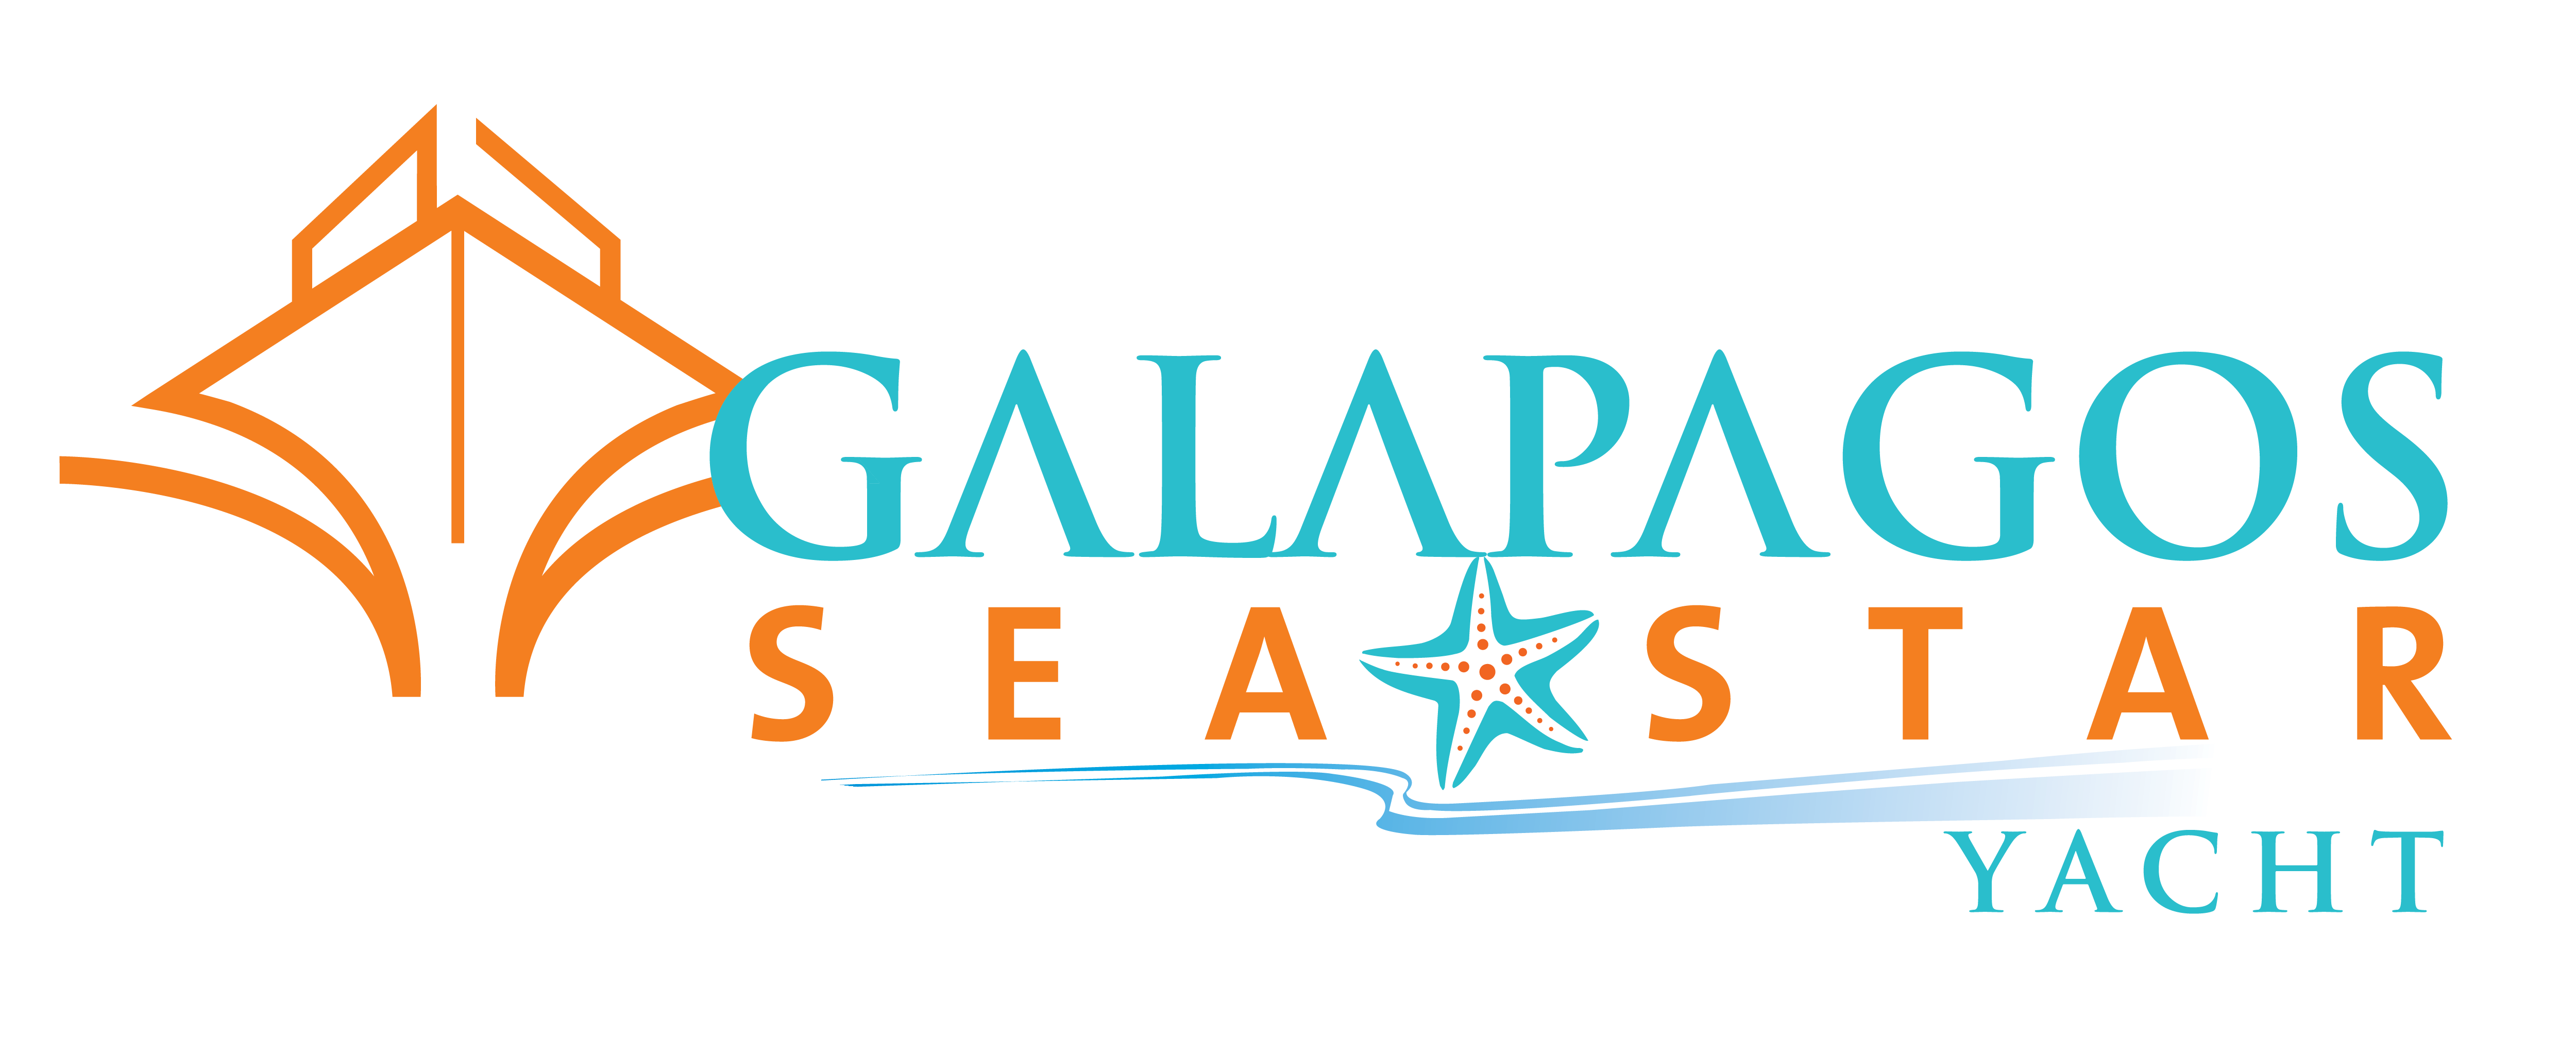 GALAPAGOS SEA STAR YACHT